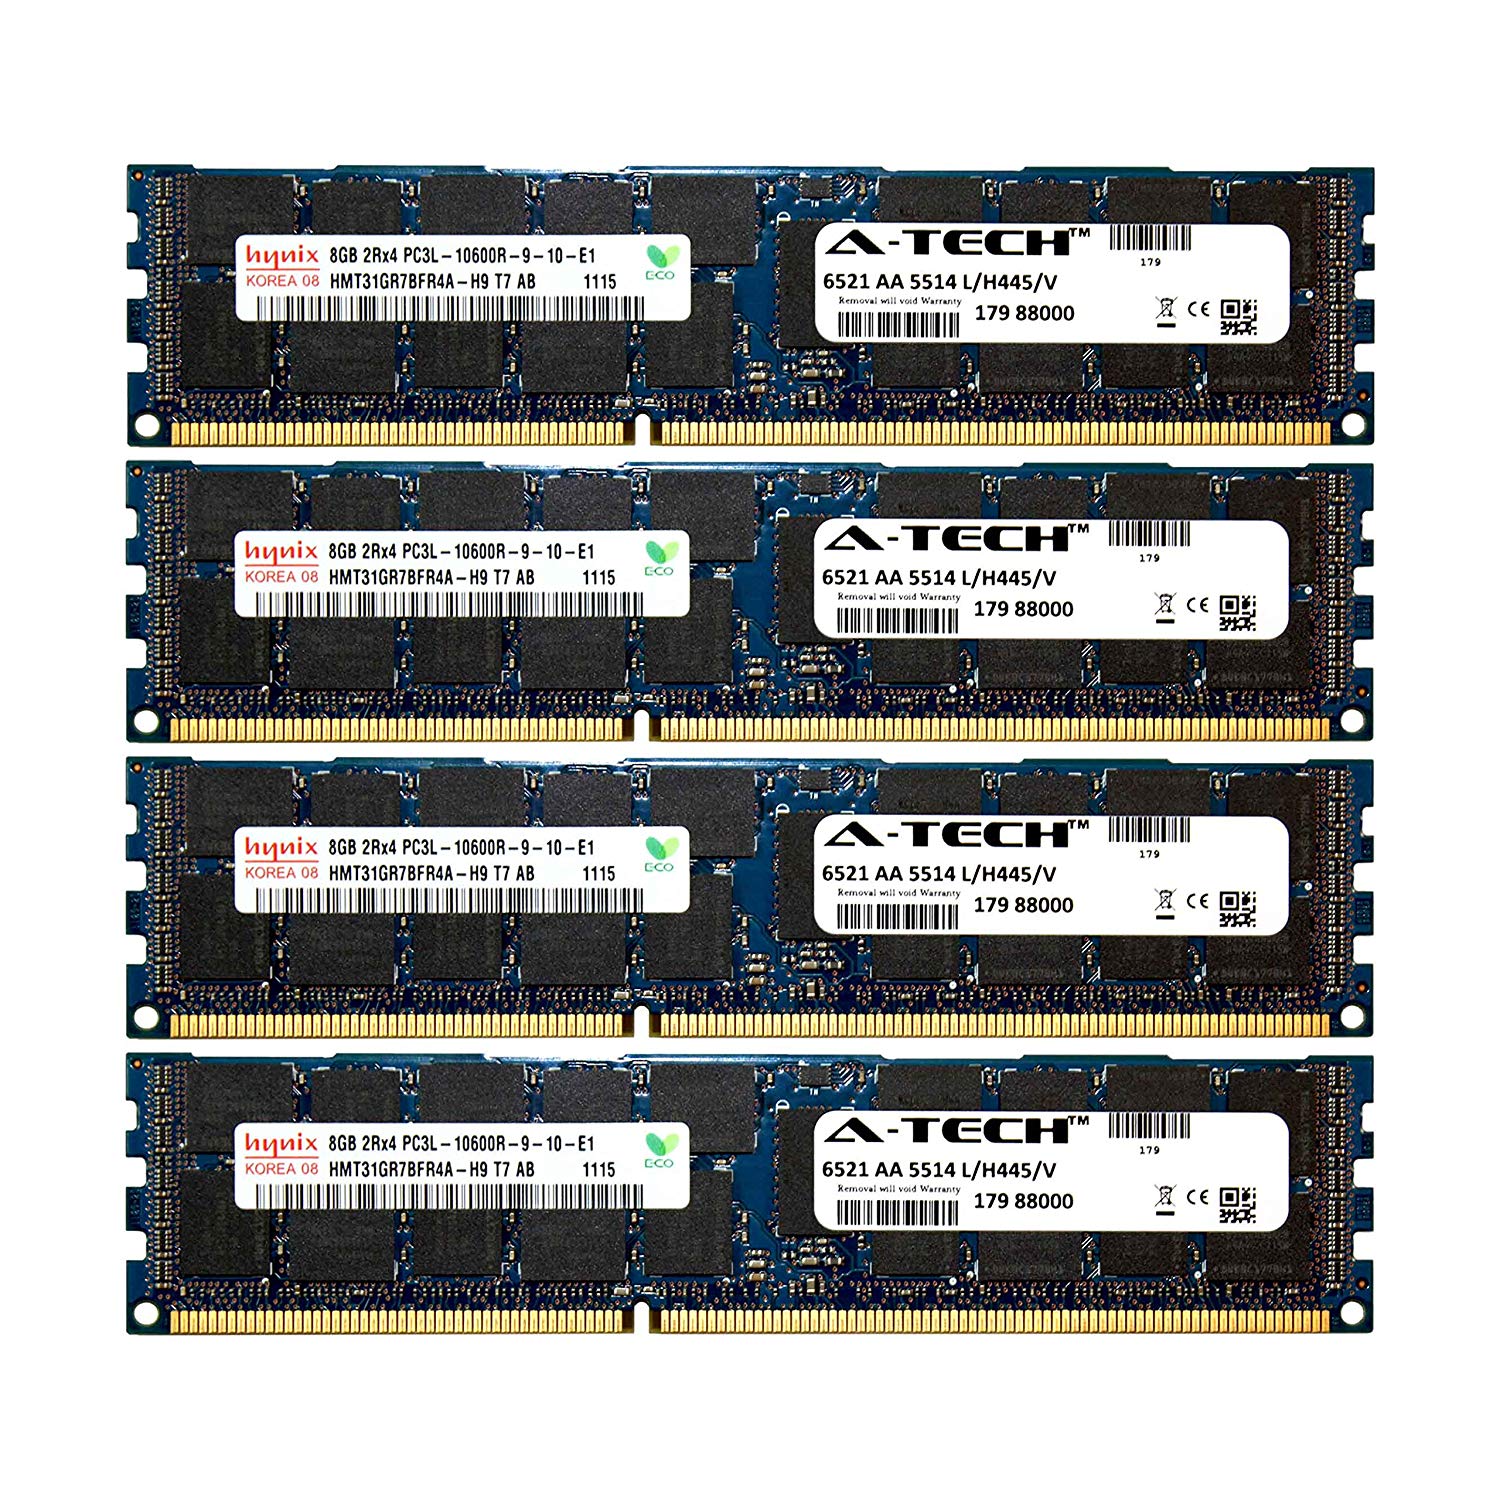 A-Tech Hynix 32GB Kit 4 x 8GB PC3-10600 1.35V For Dell PowerEdge M710hd M820 M915 A3721494 R410 R420 R515 A3721500 R520 R610 R620 A3721505 R715 R720 R720xd Snpp9rn2c/8g R810 R815 A2626072 Memory RAM